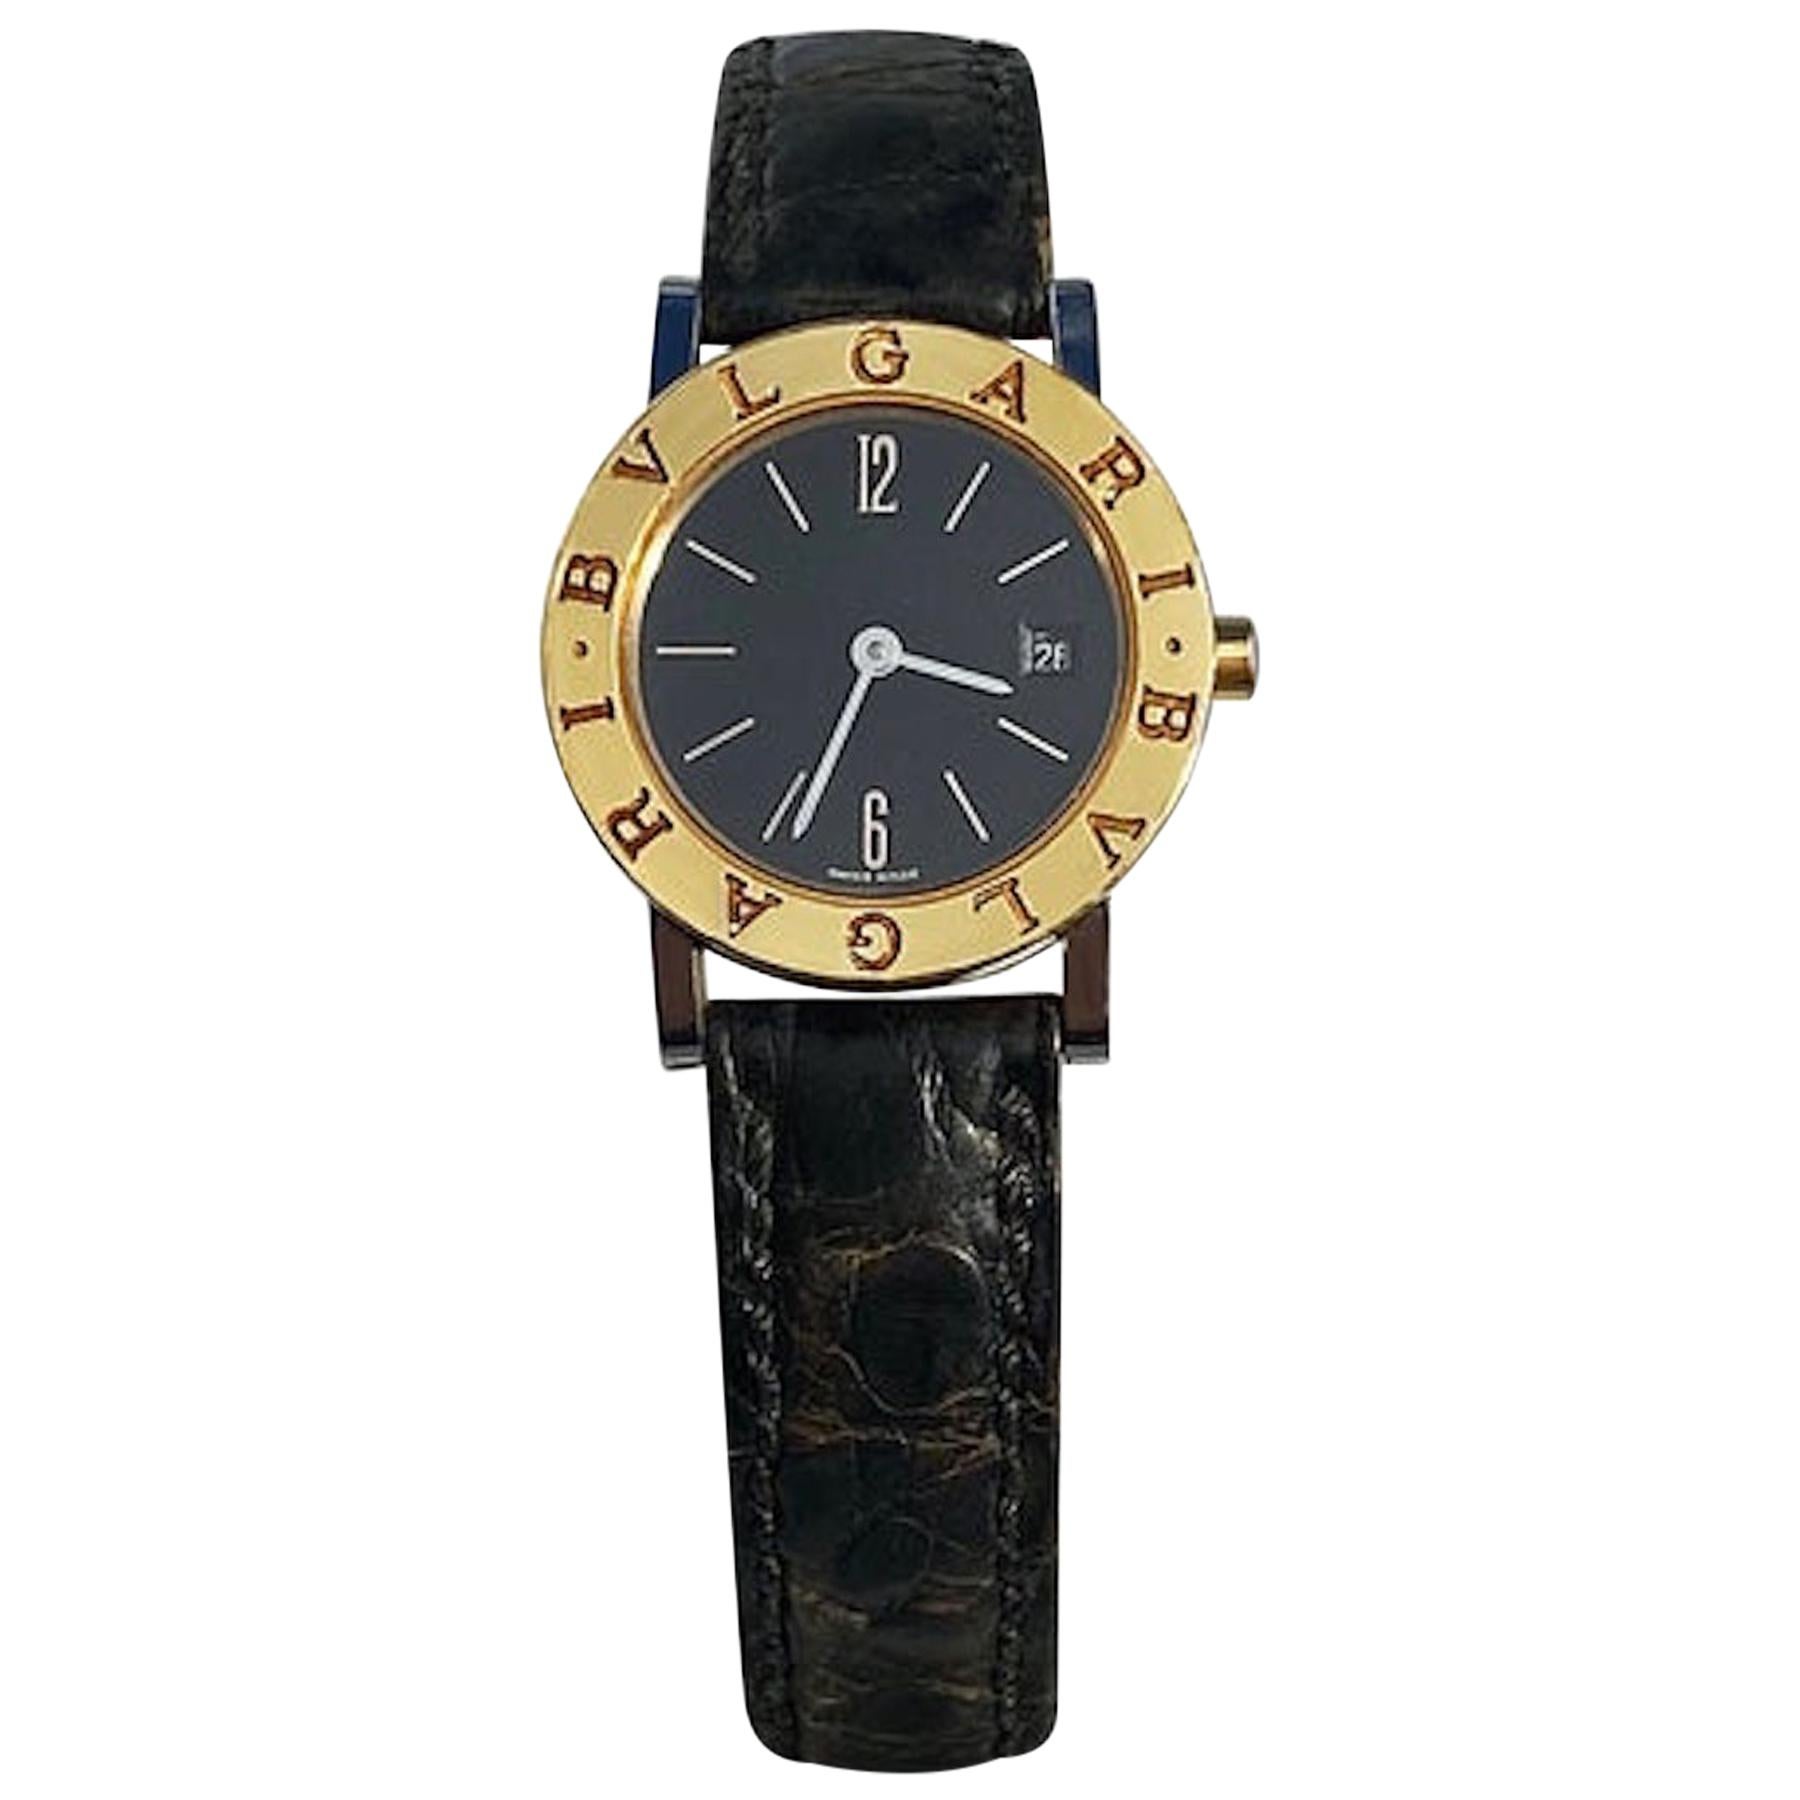 Bvlgari BB26 SLG Gold Dial Black Leather Strap Watch